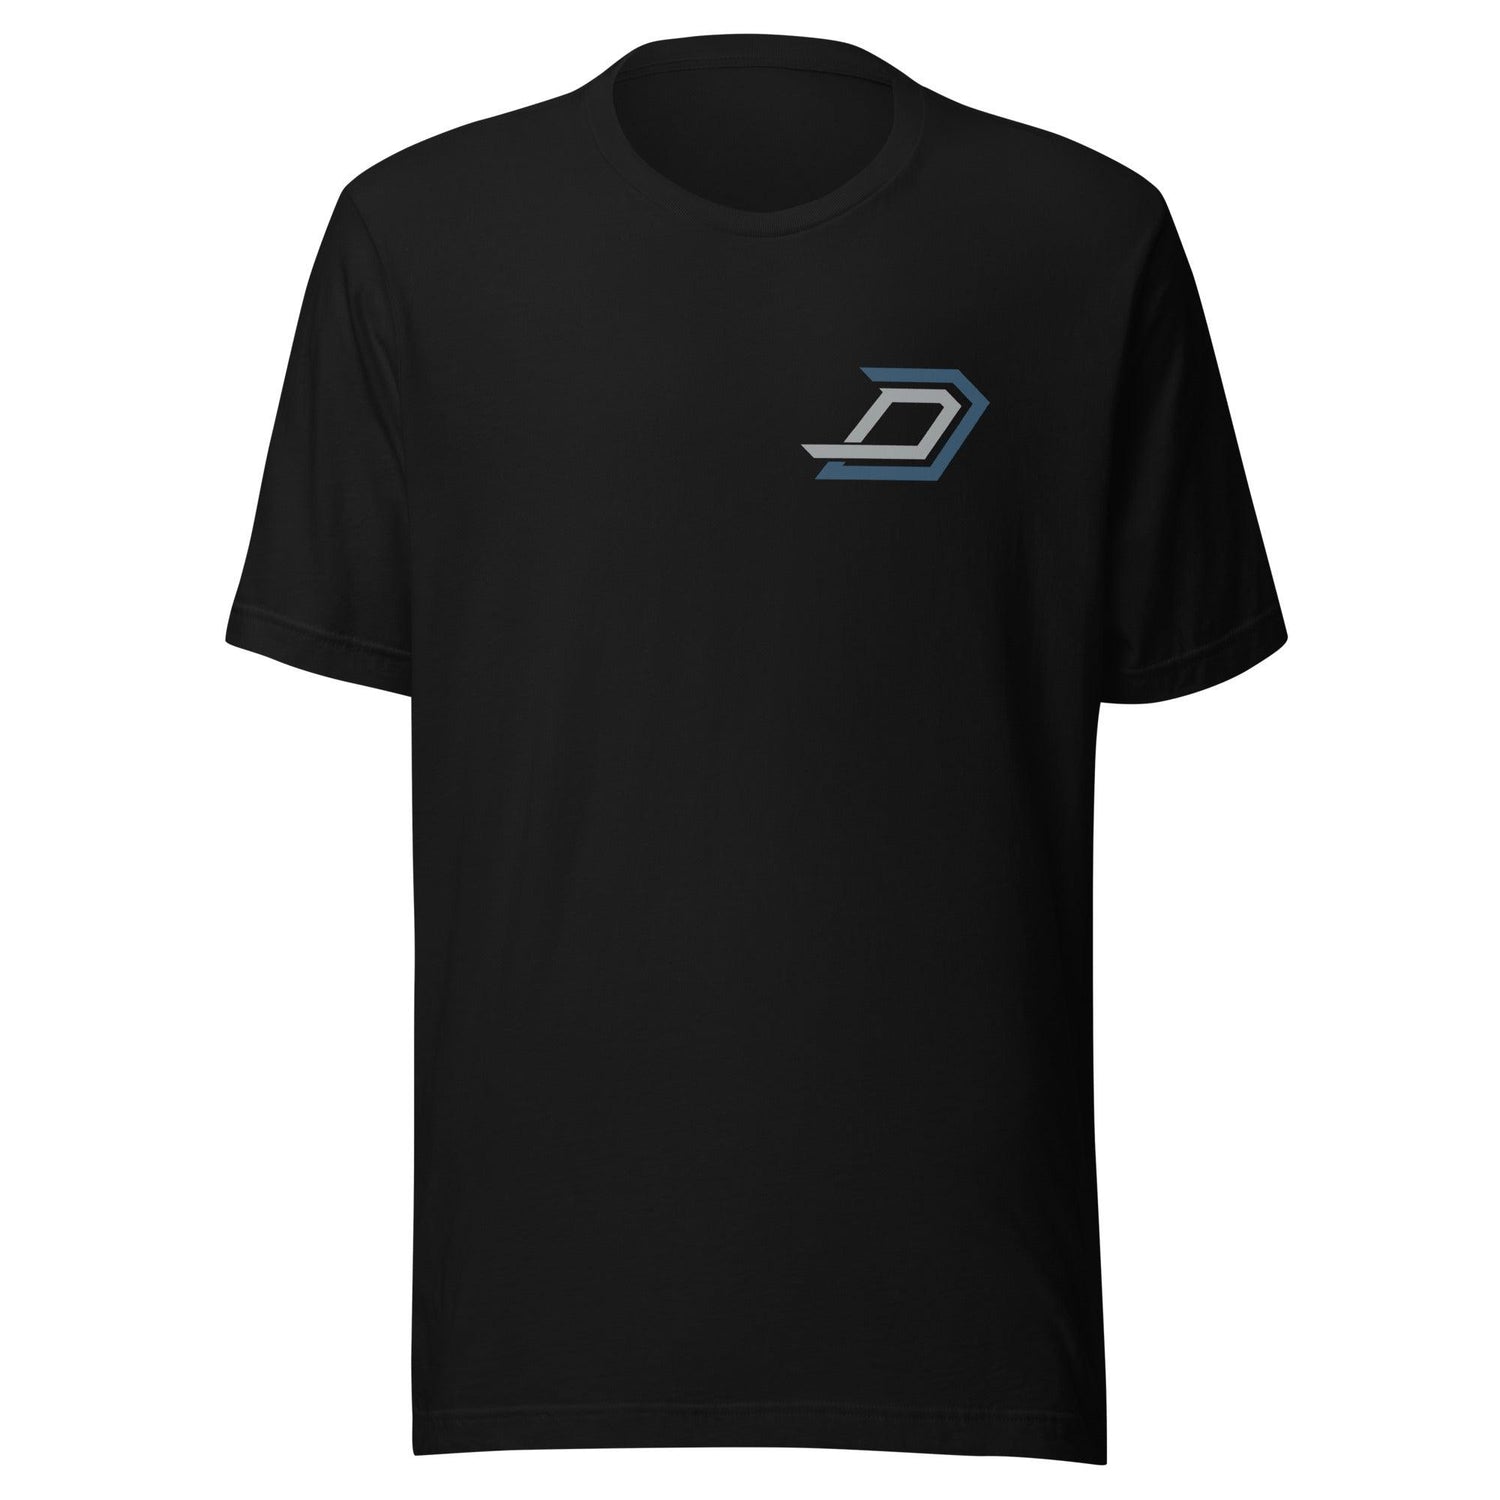 Devin Dye "Essential" t-shirt - Fan Arch